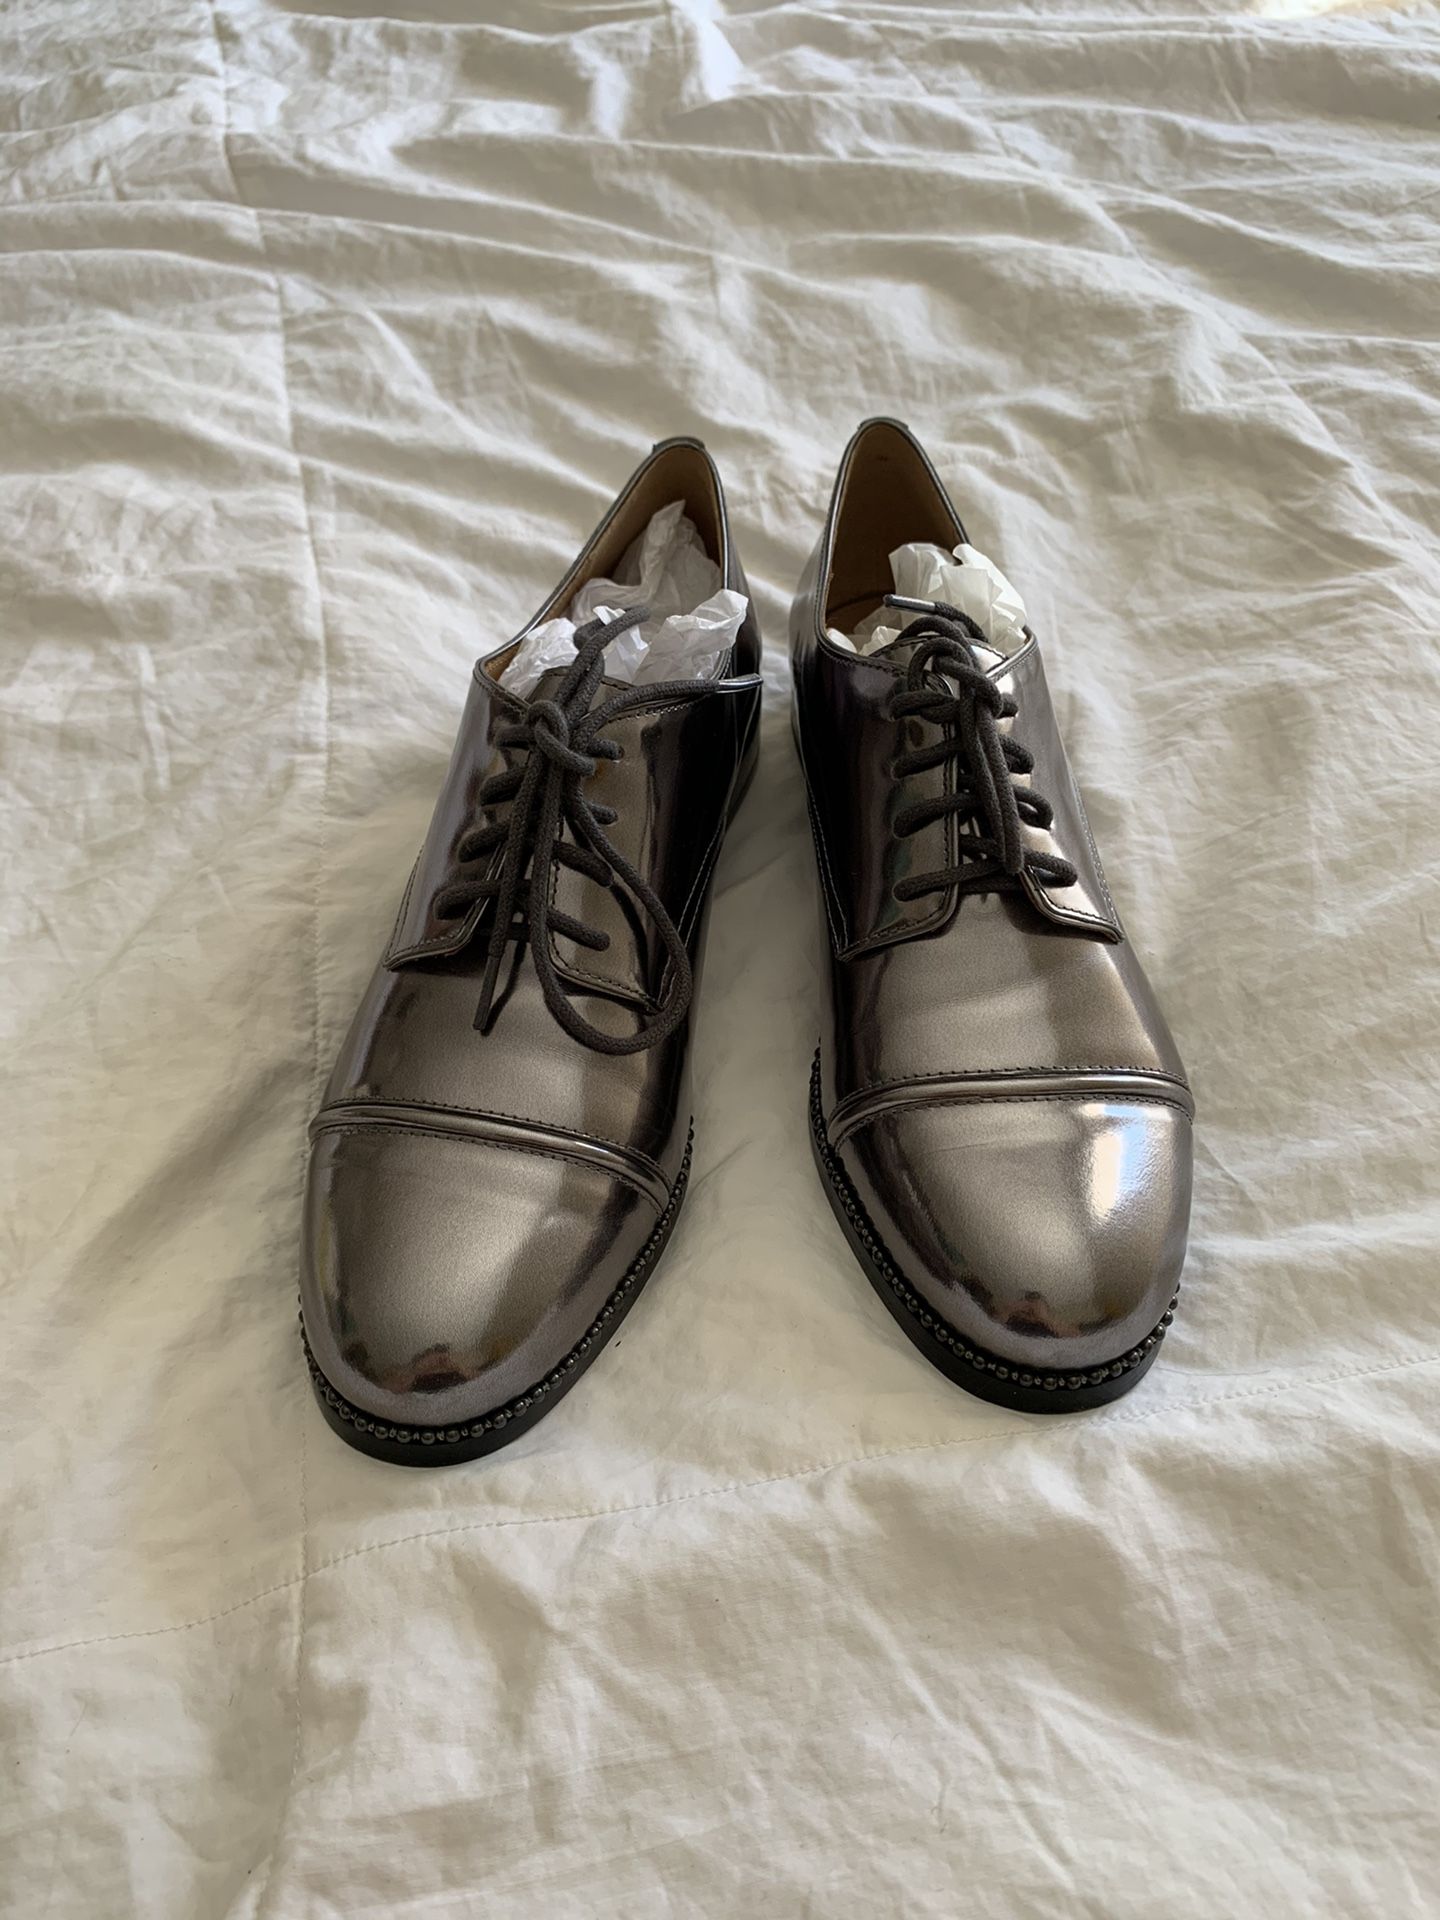 Coach Shoes Metallic NEW Size 6.5